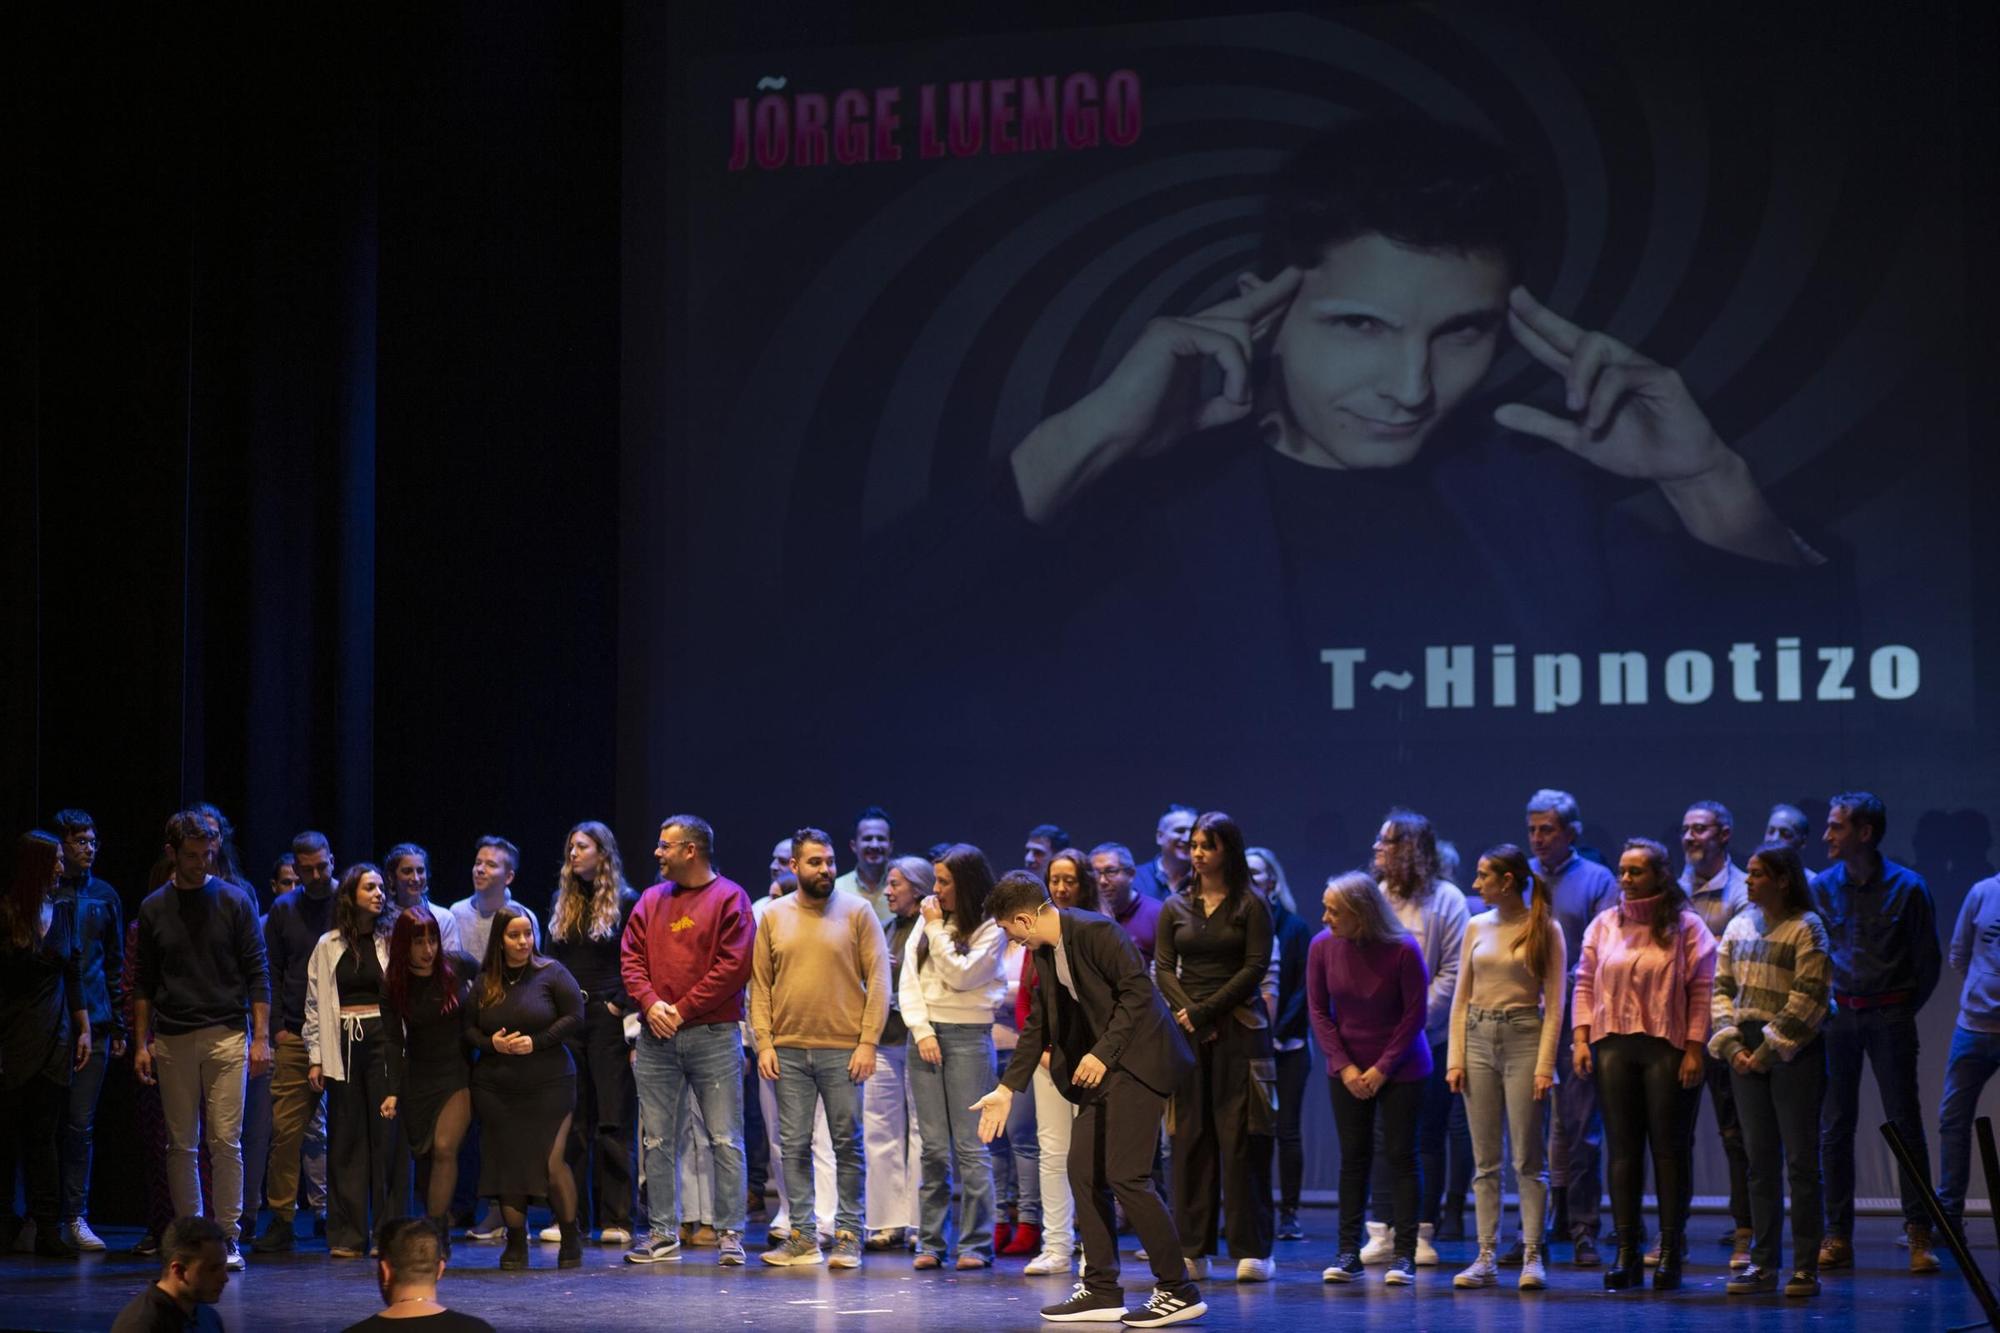 Jorge Luengo hipnotiza a Cáceres